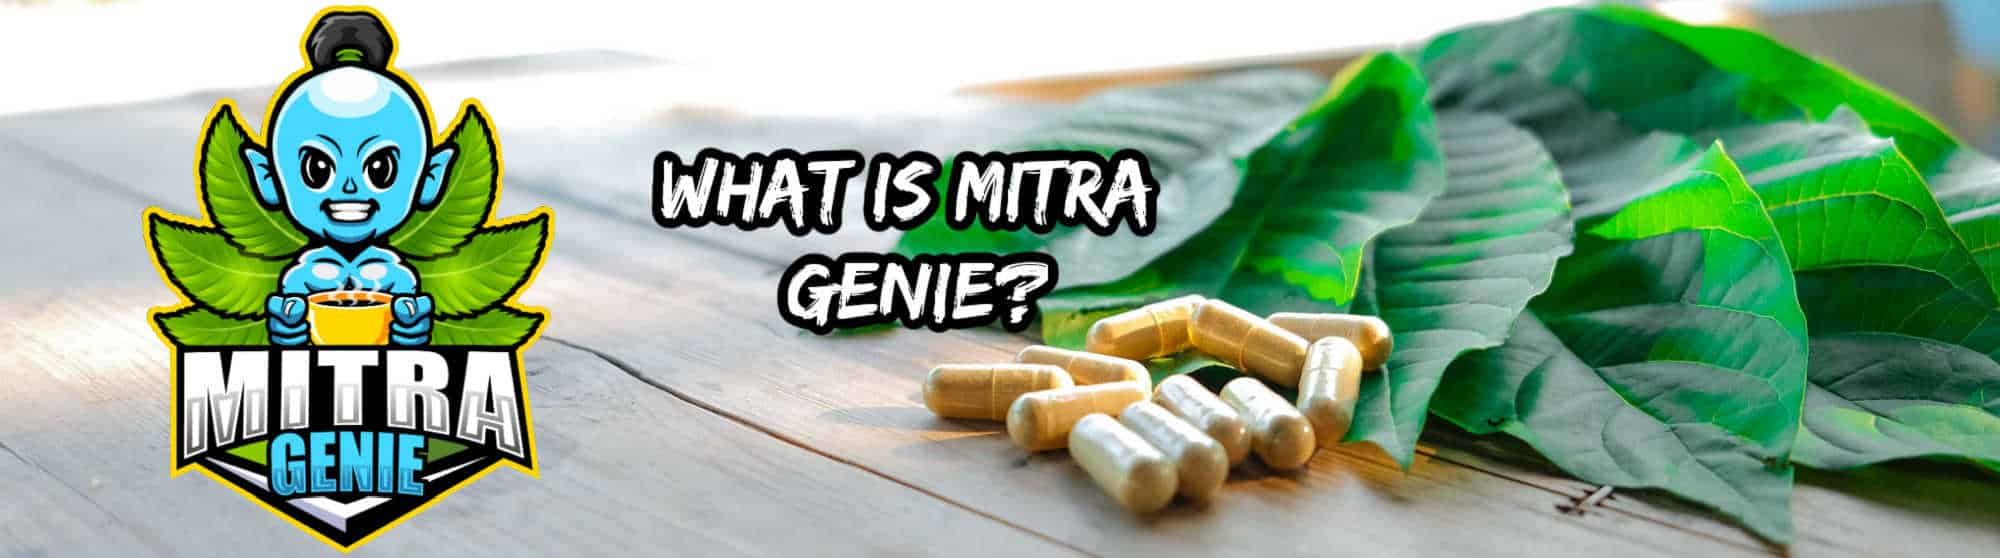 Mitra Genie : Is This International Kratom Brand Any Good?